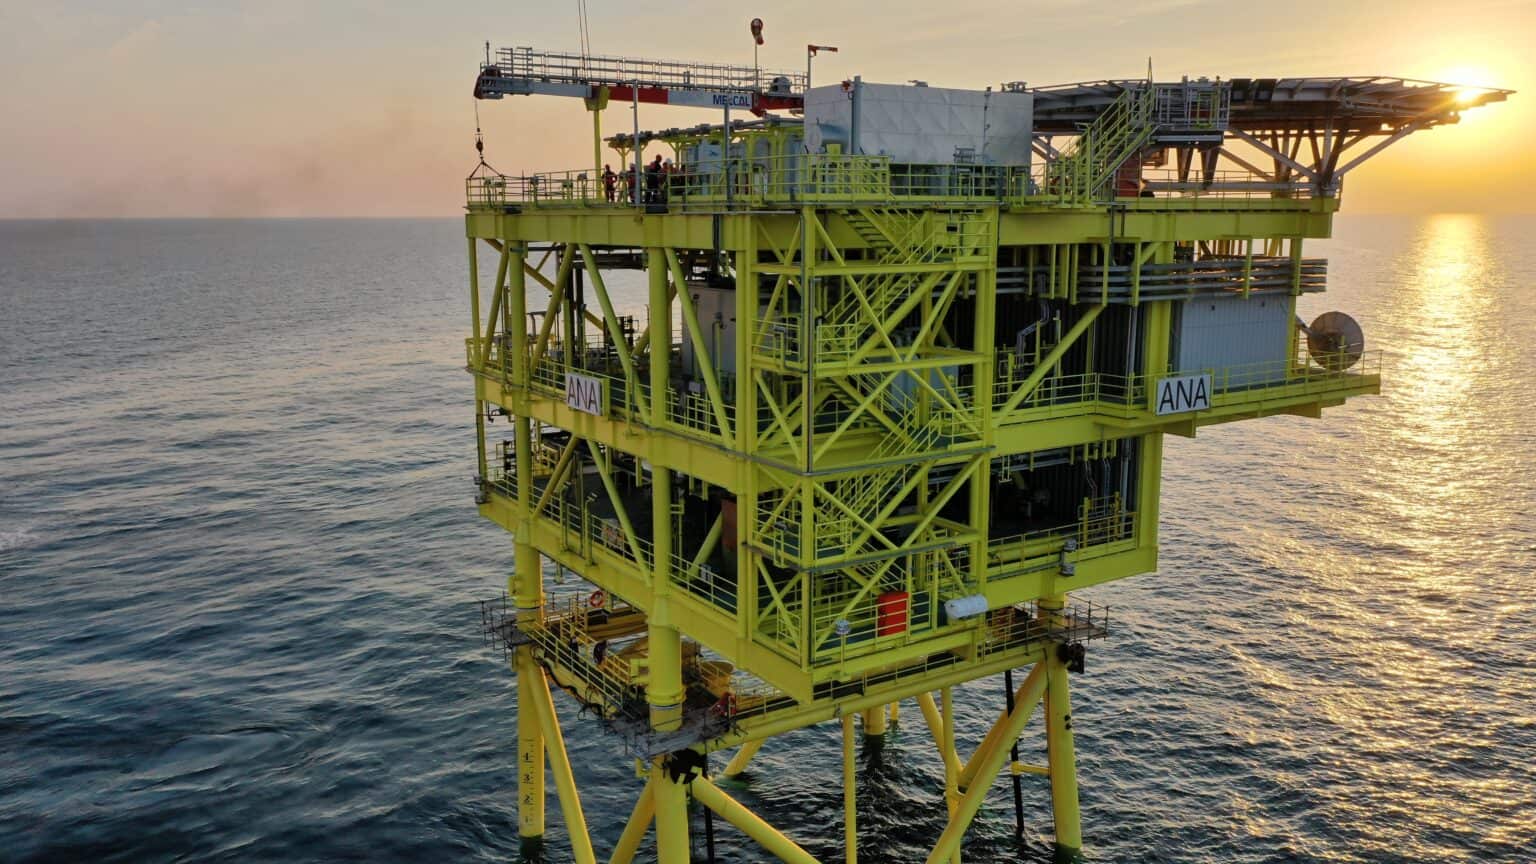 Black Sea Gas Platform Launched Off Romania Despite War Risks and No Insurance